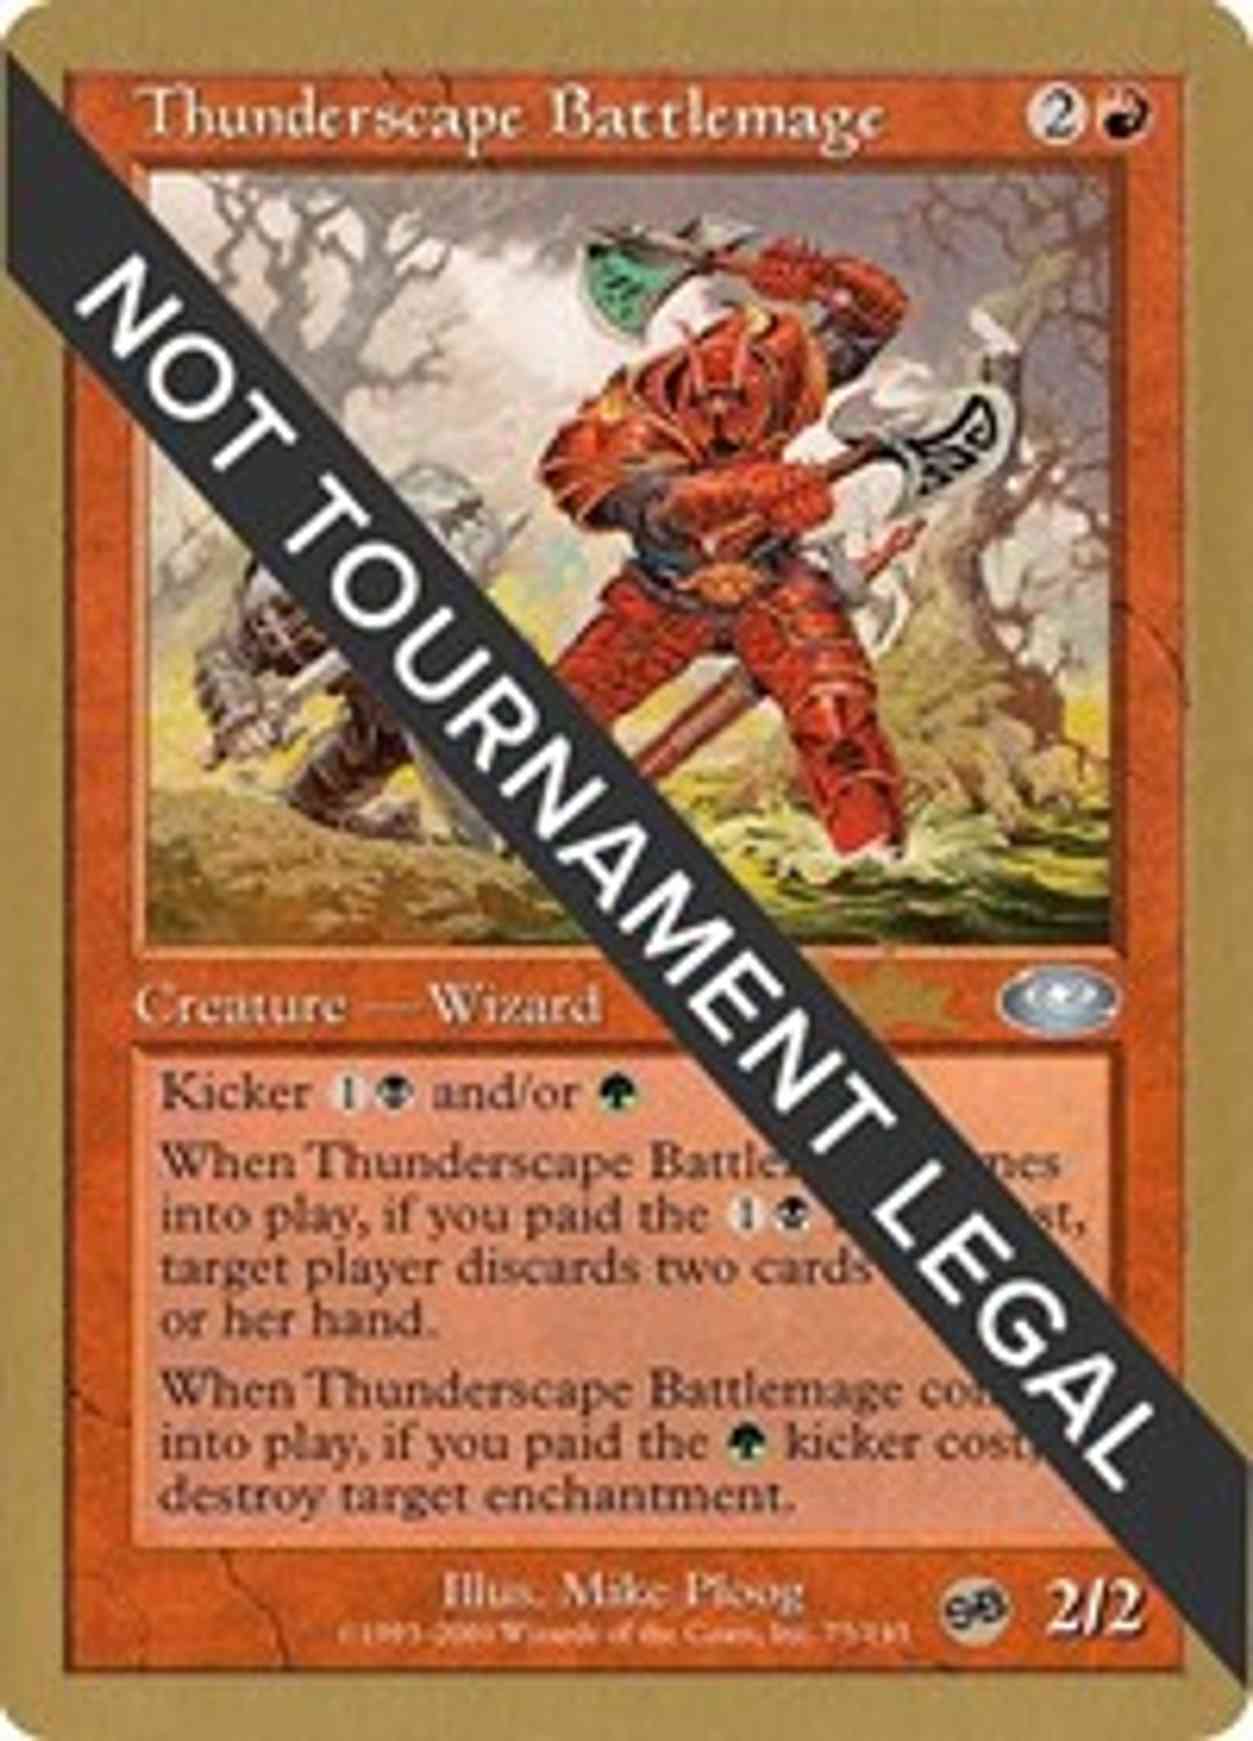 Thunderscape Battlemage - 2002 Brian Kibler (PLS) (SB) magic card front